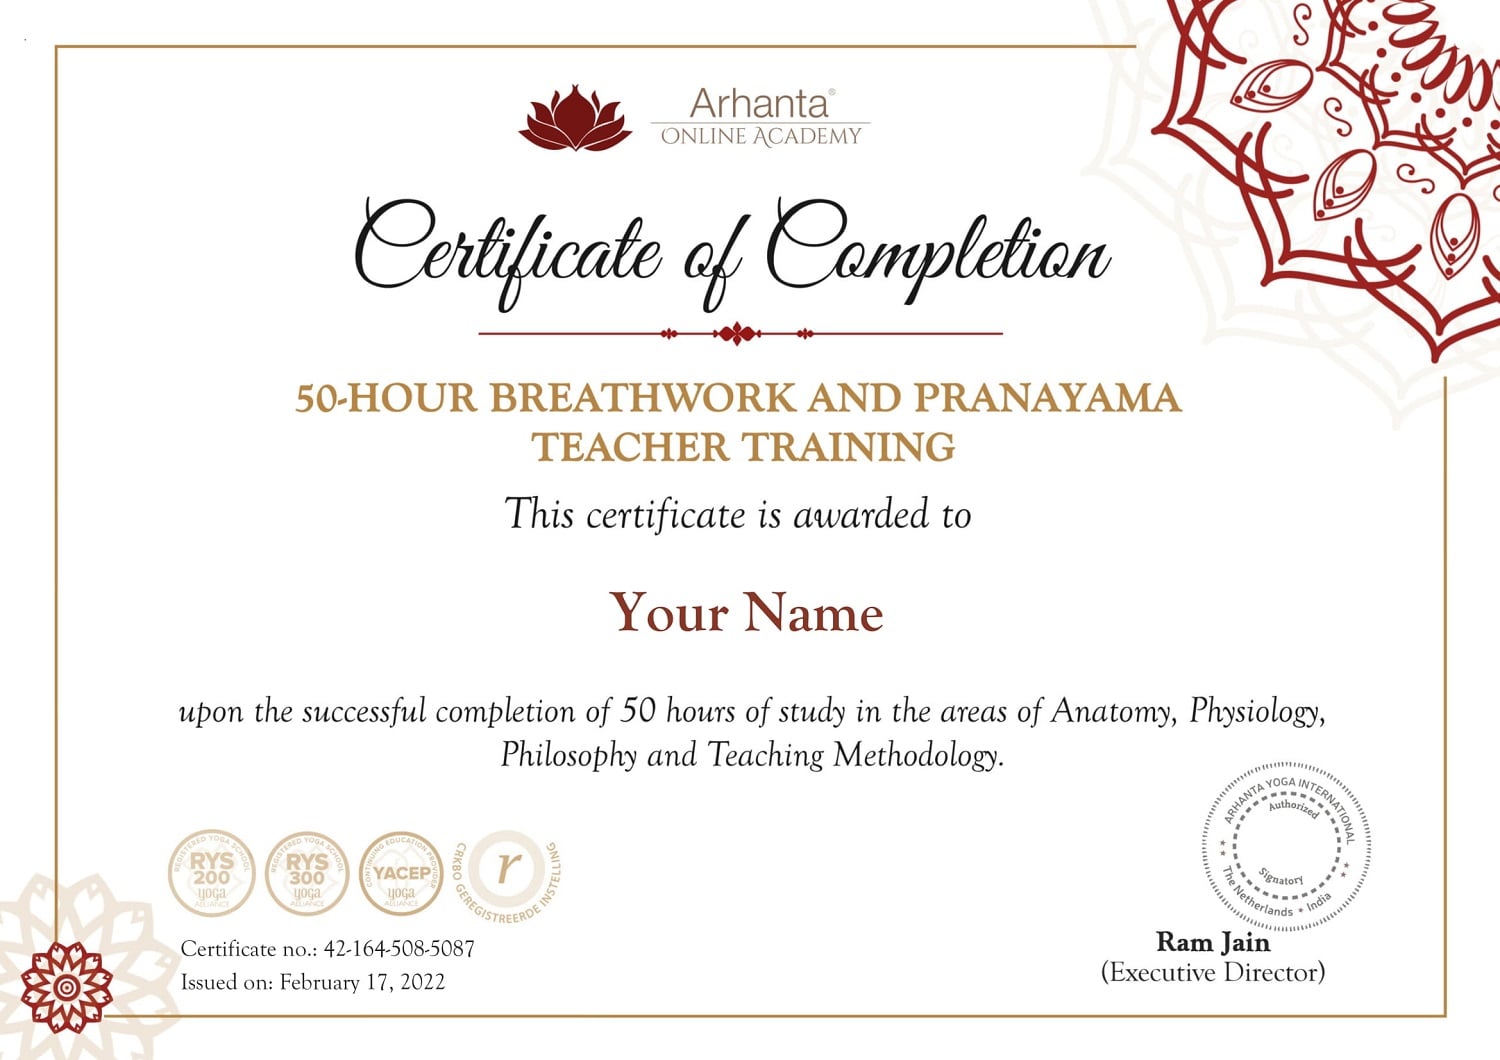 Pranayama and Breathwork Teacher Training Certificate